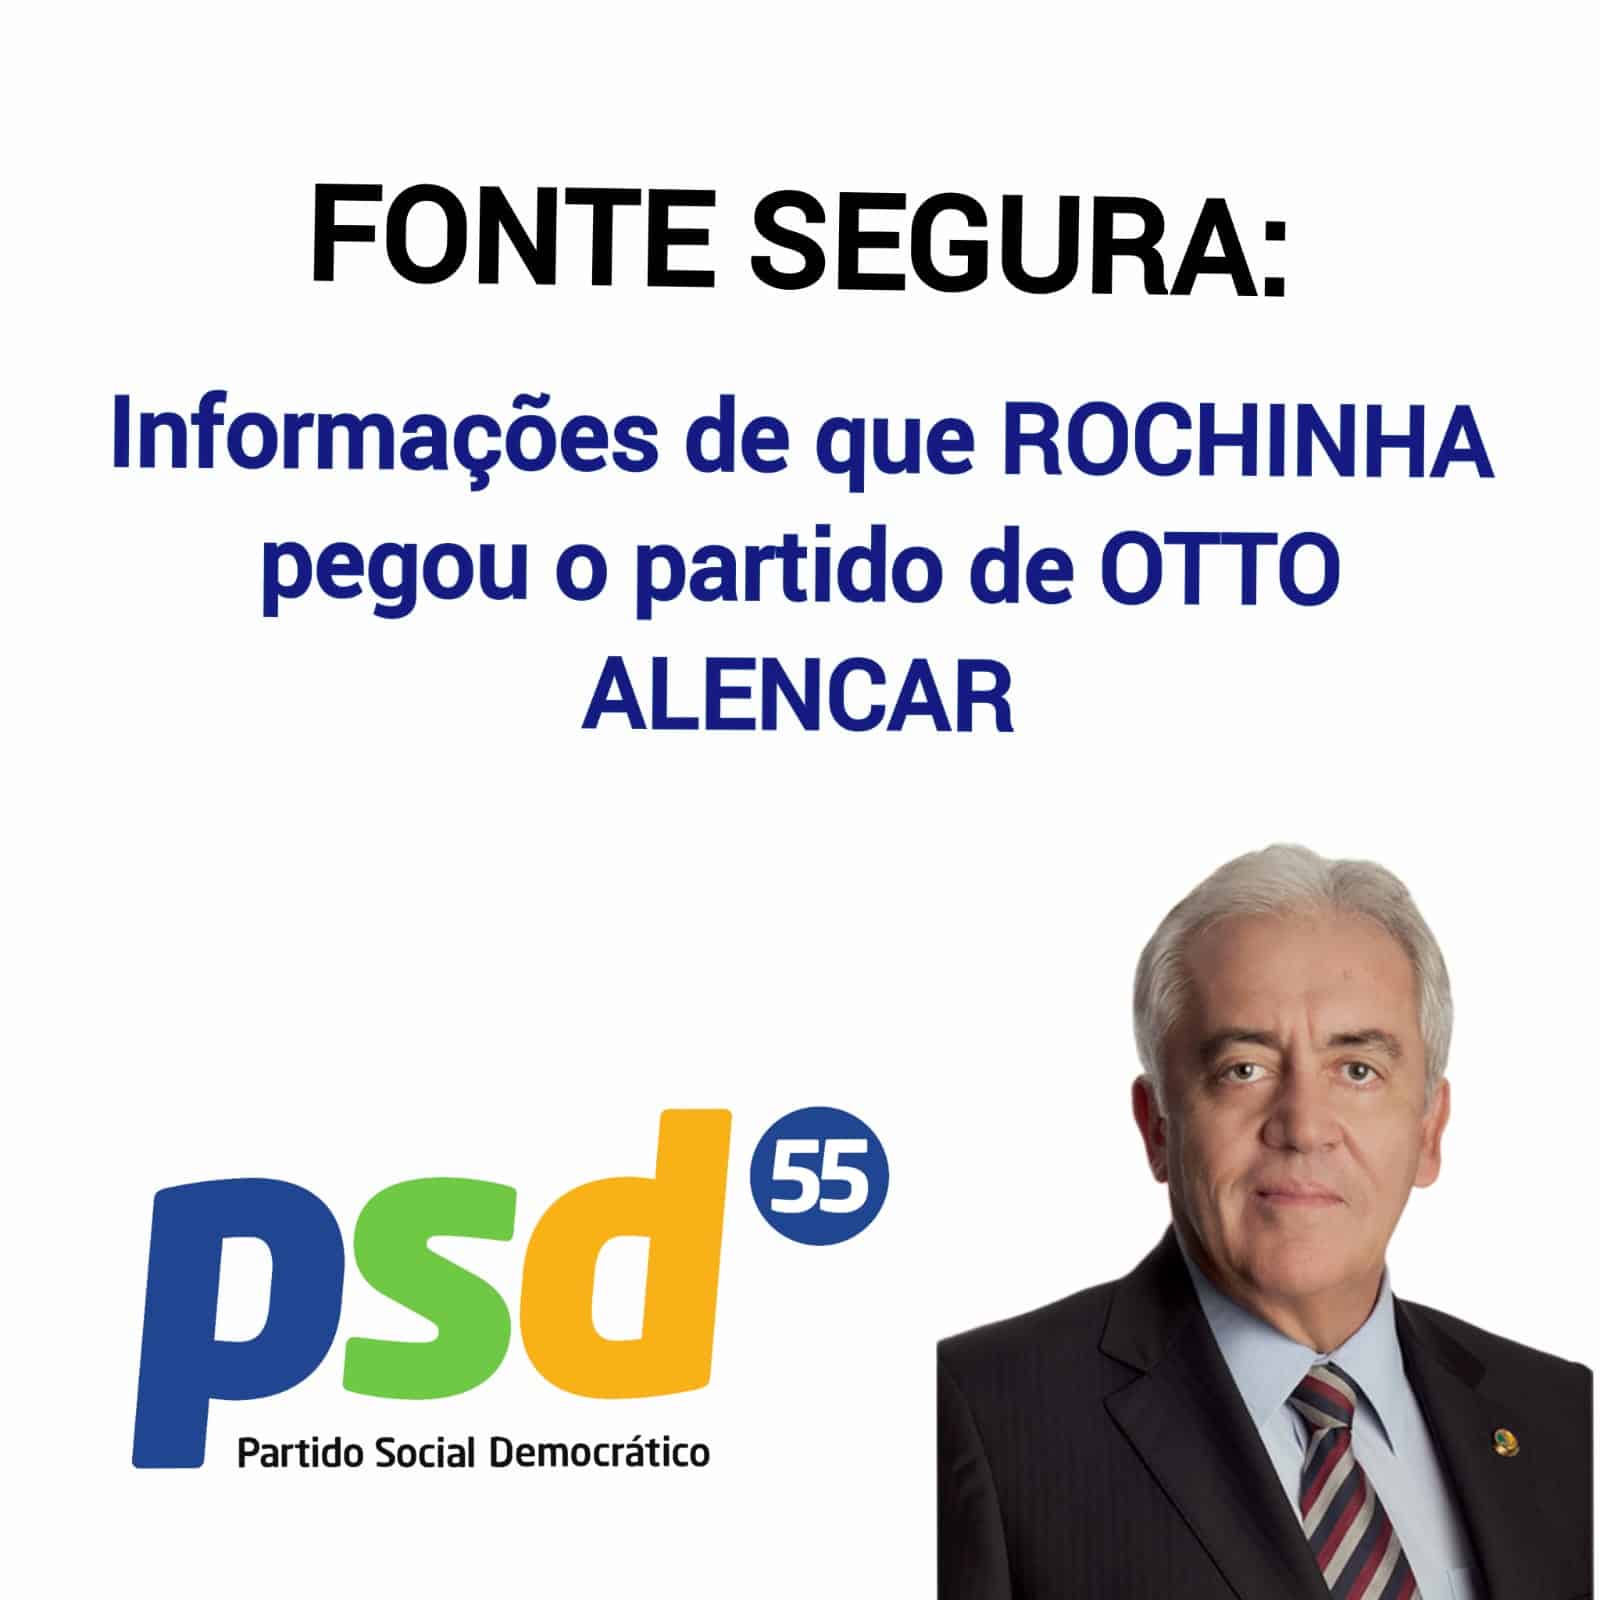 PSD Bahia  Partido Social Democrático